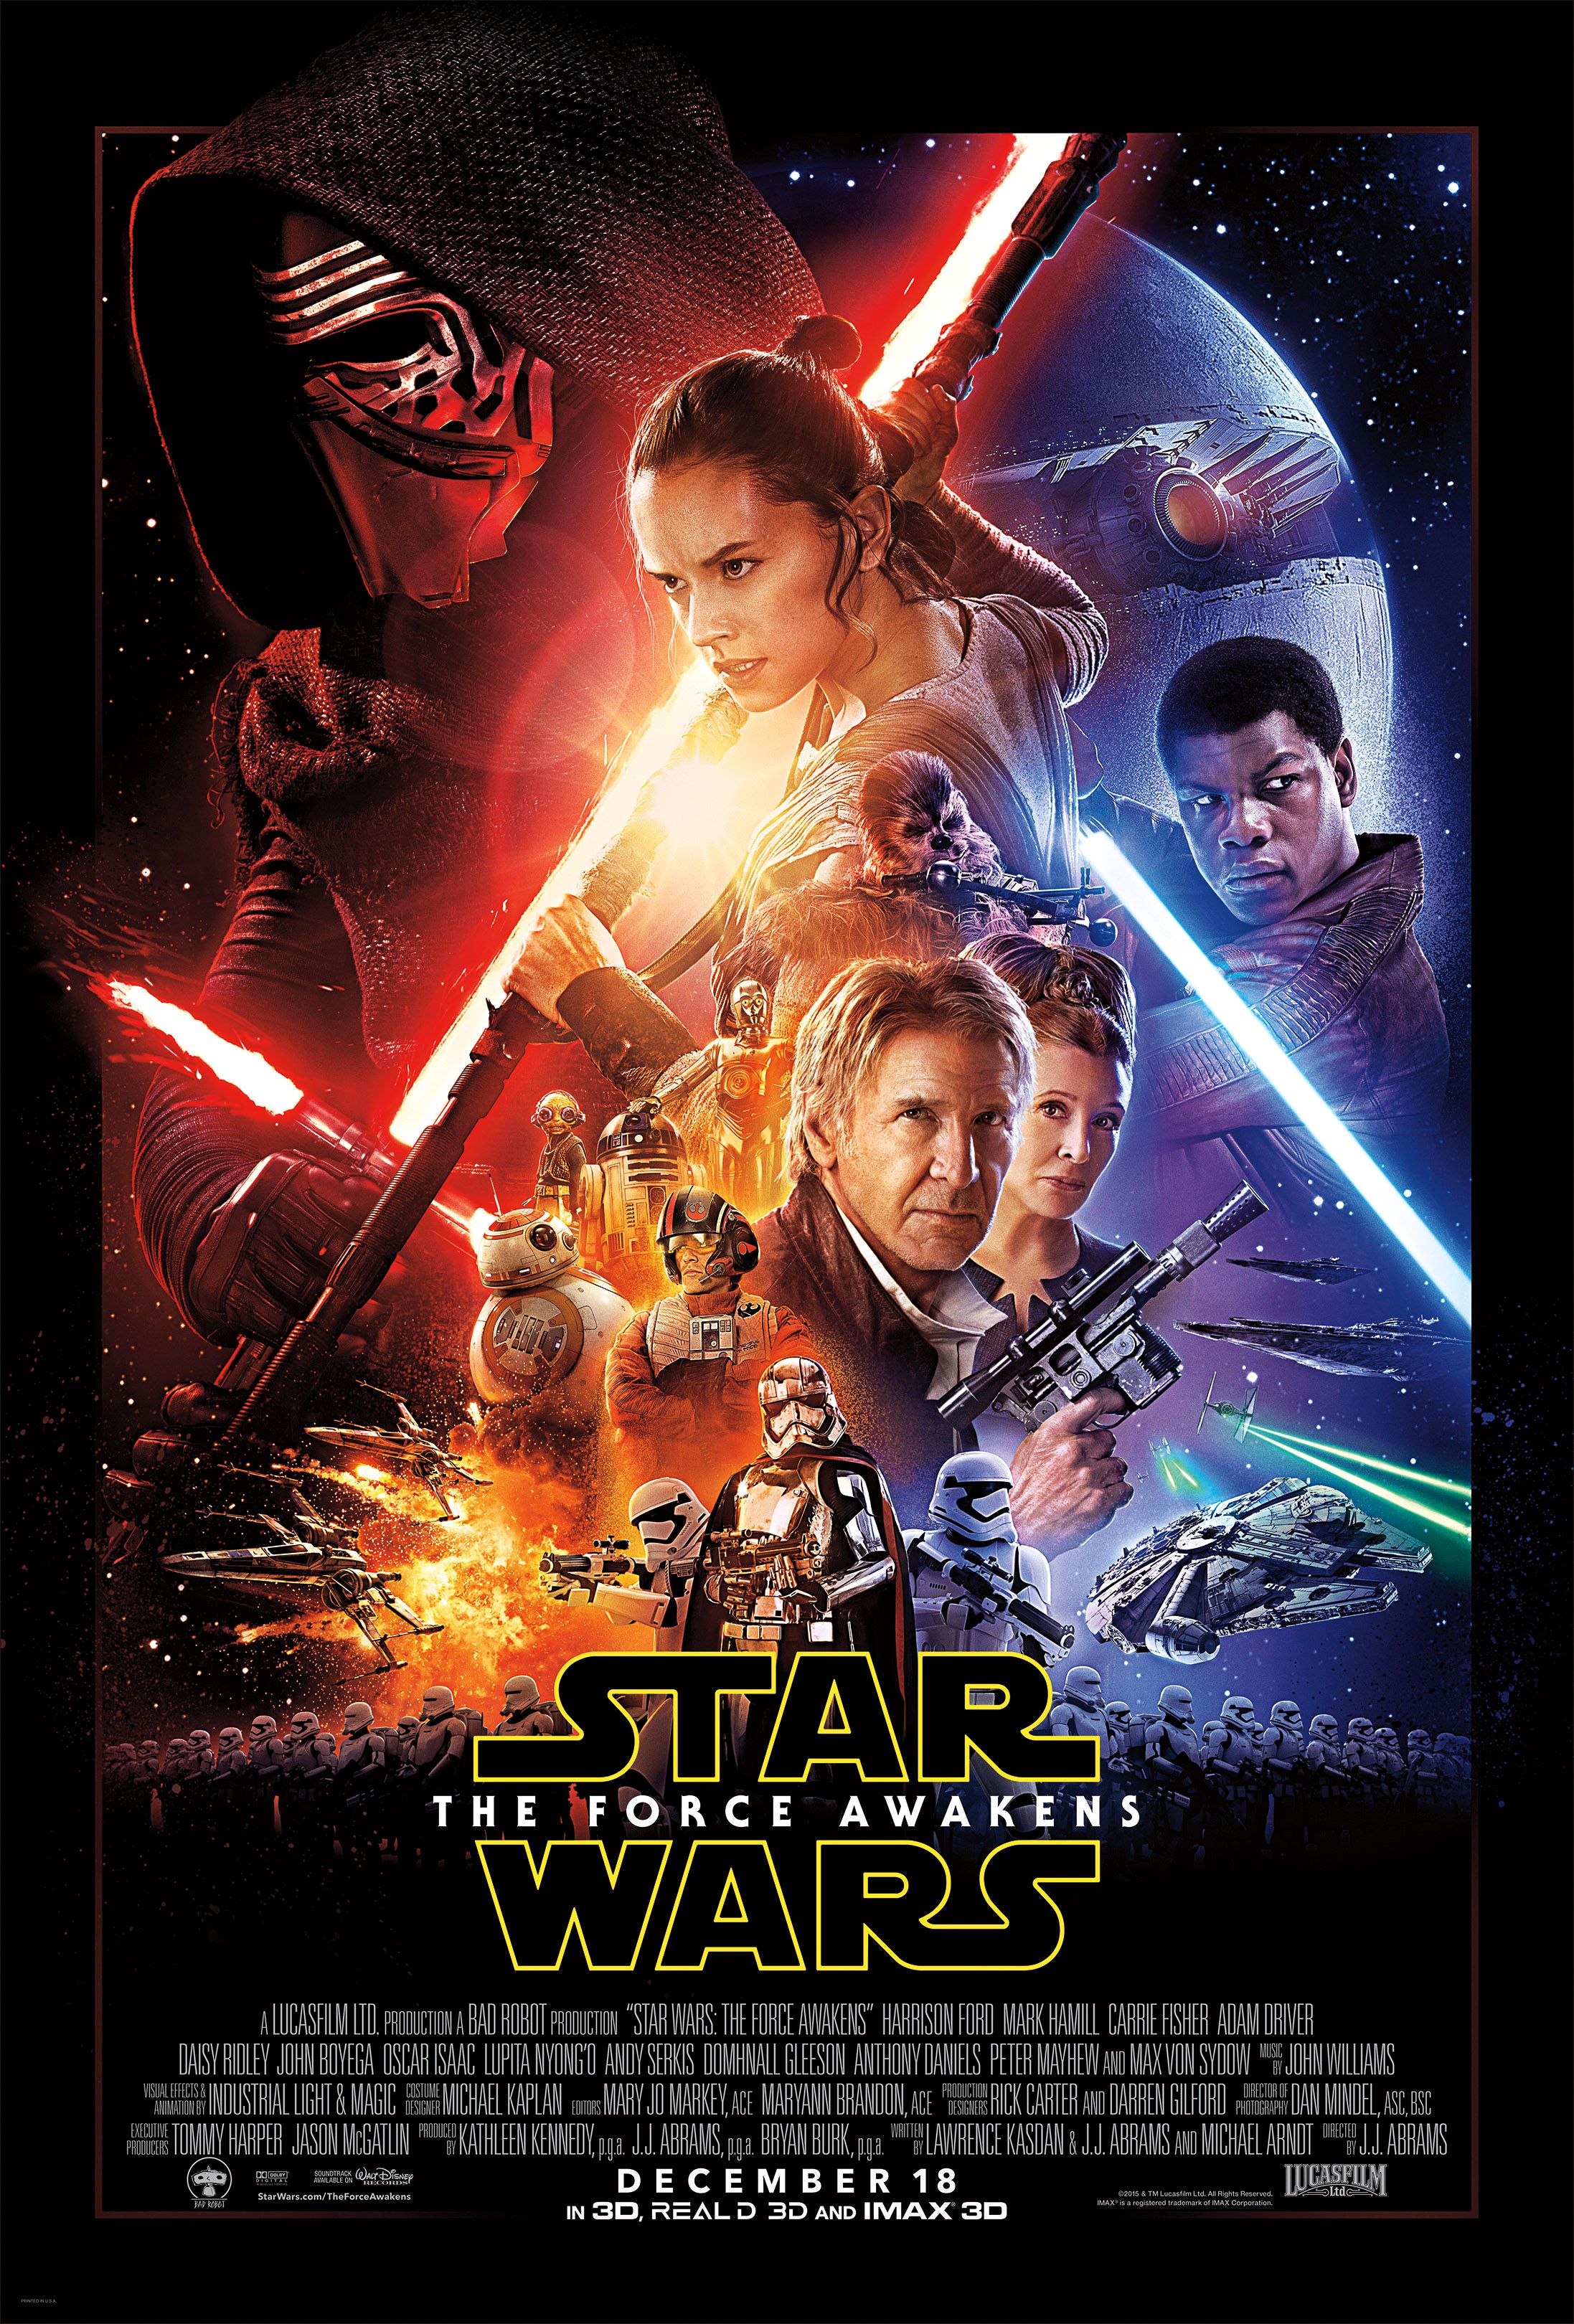 Star Wars Episode VII - The Force Awakens Film Poster